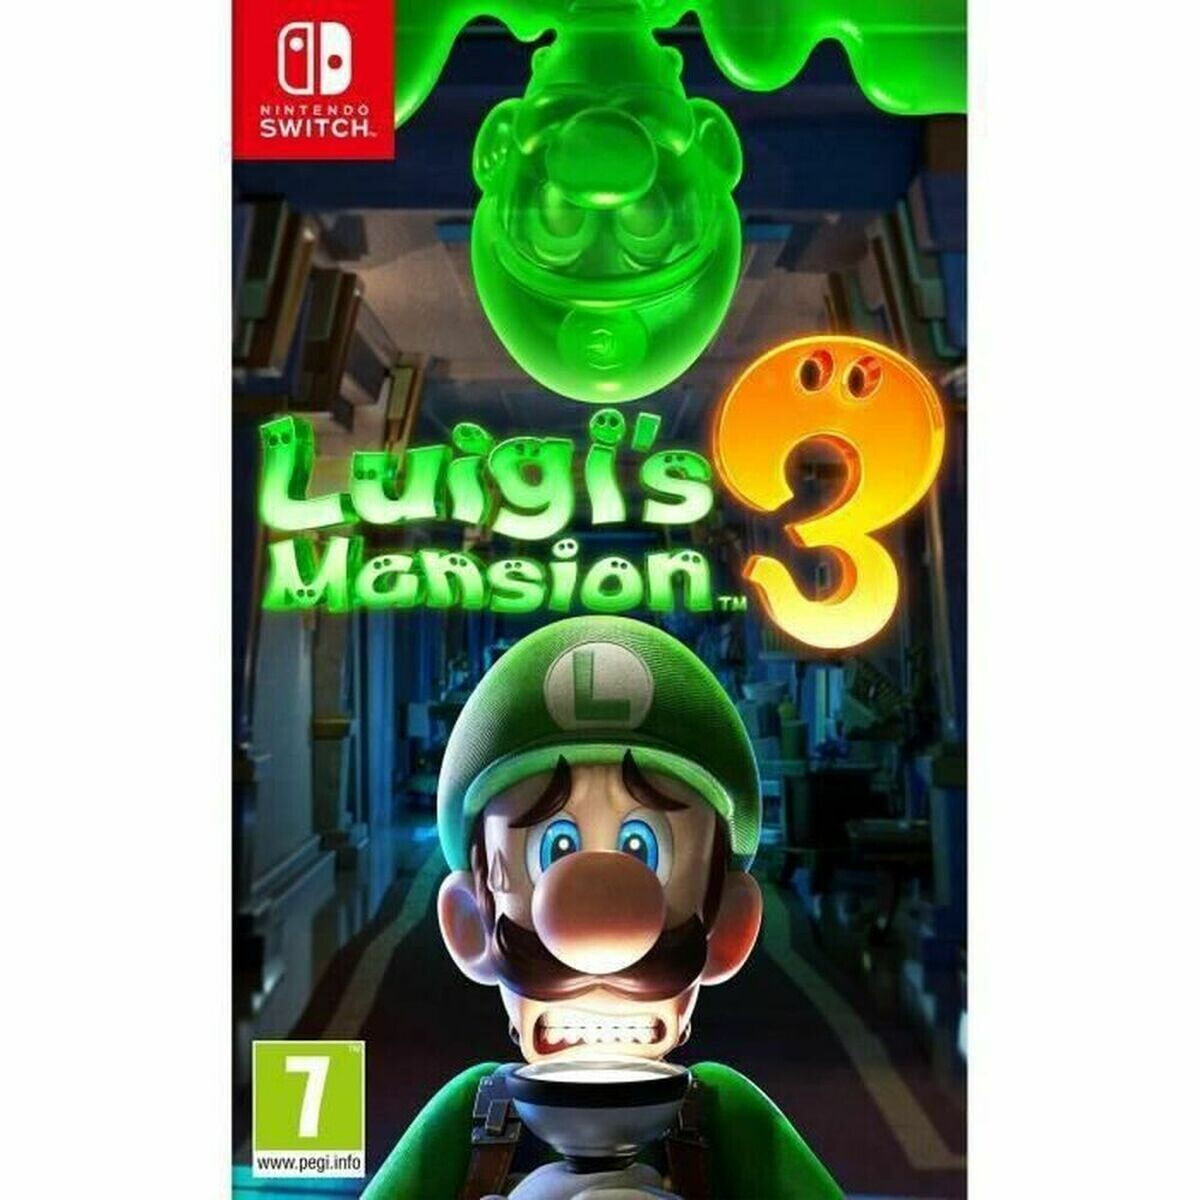 Video game for Switch Nintendo Luigi's Mansion 3